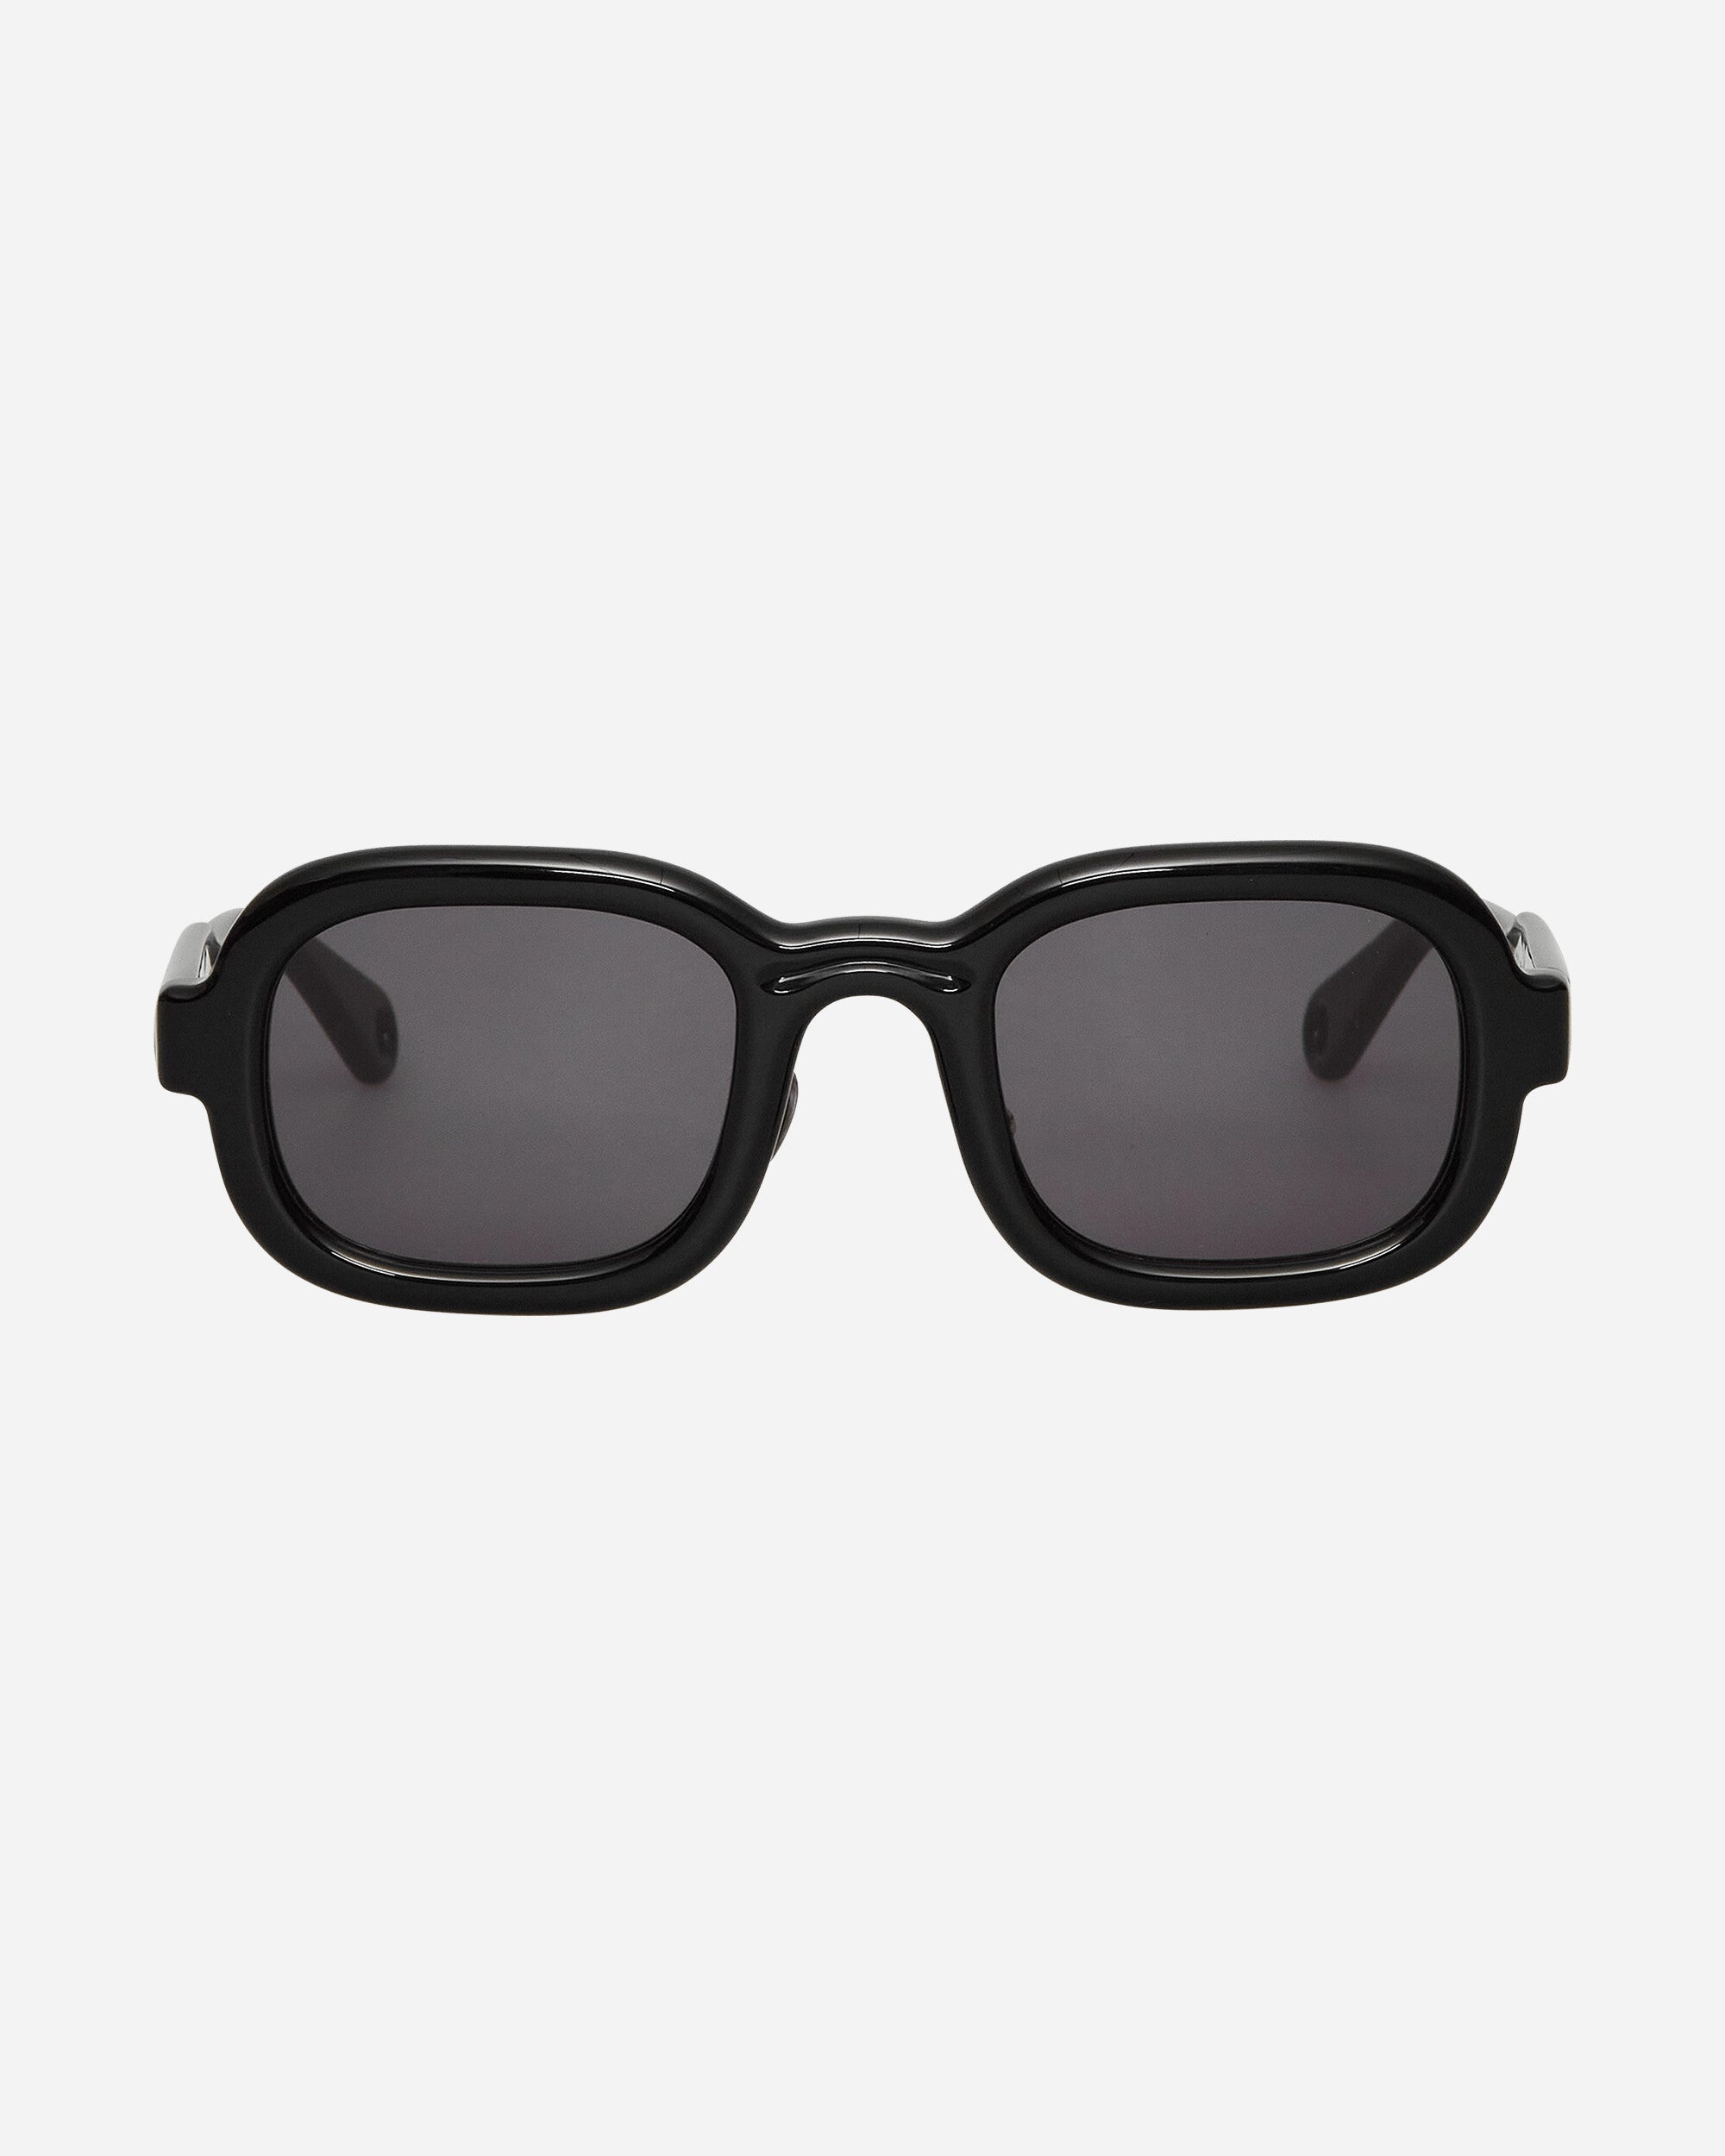 Newman Post Modern Primitive Eye Protection Sunglasses Black - 2